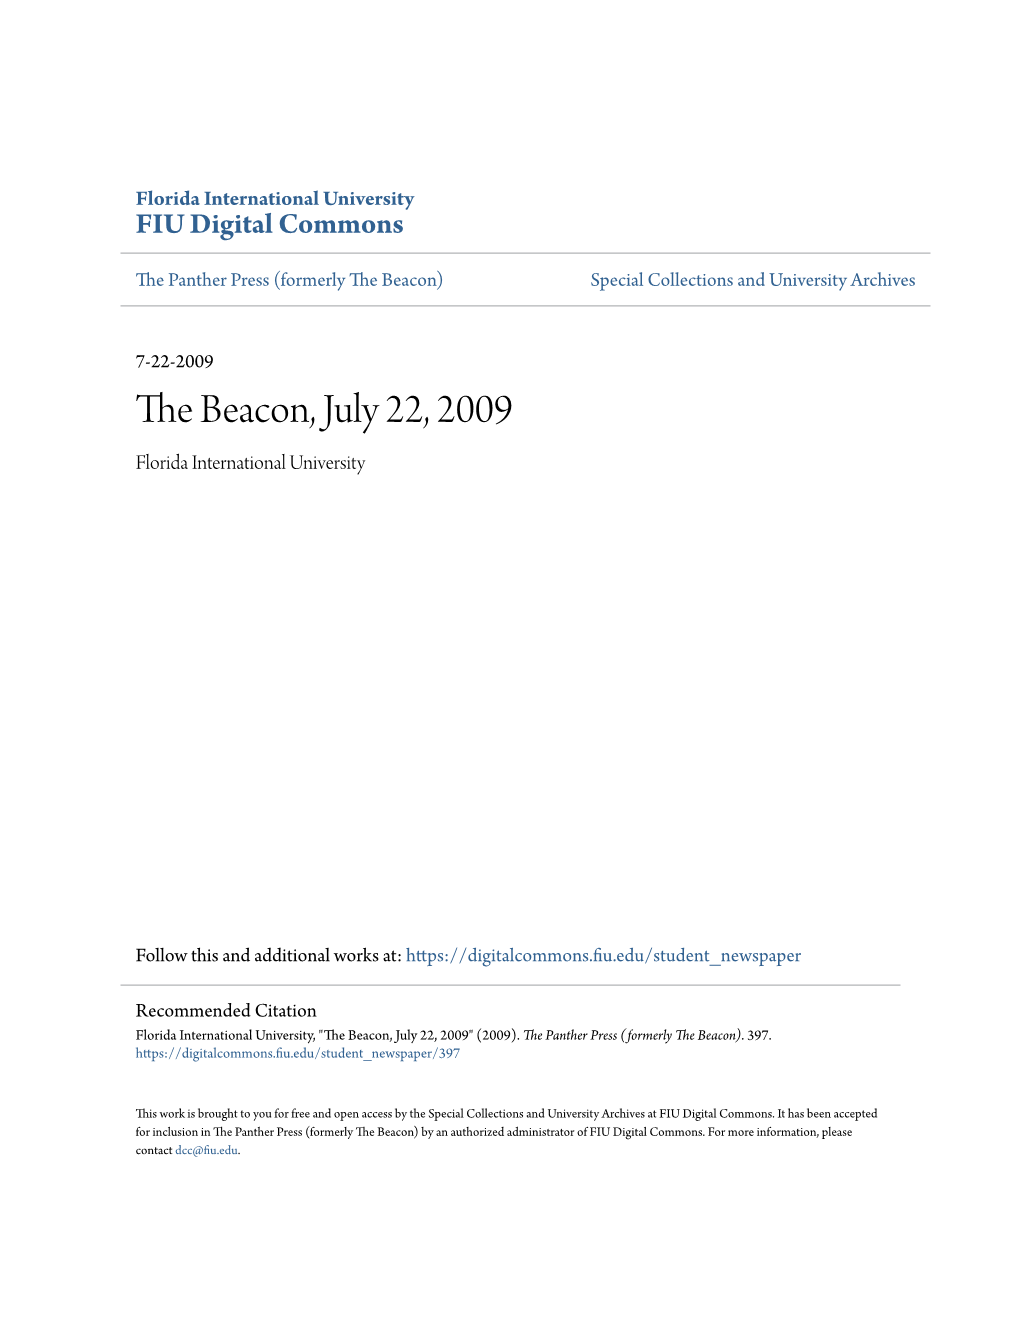 The Beacon, July 22, 2009 Florida International University